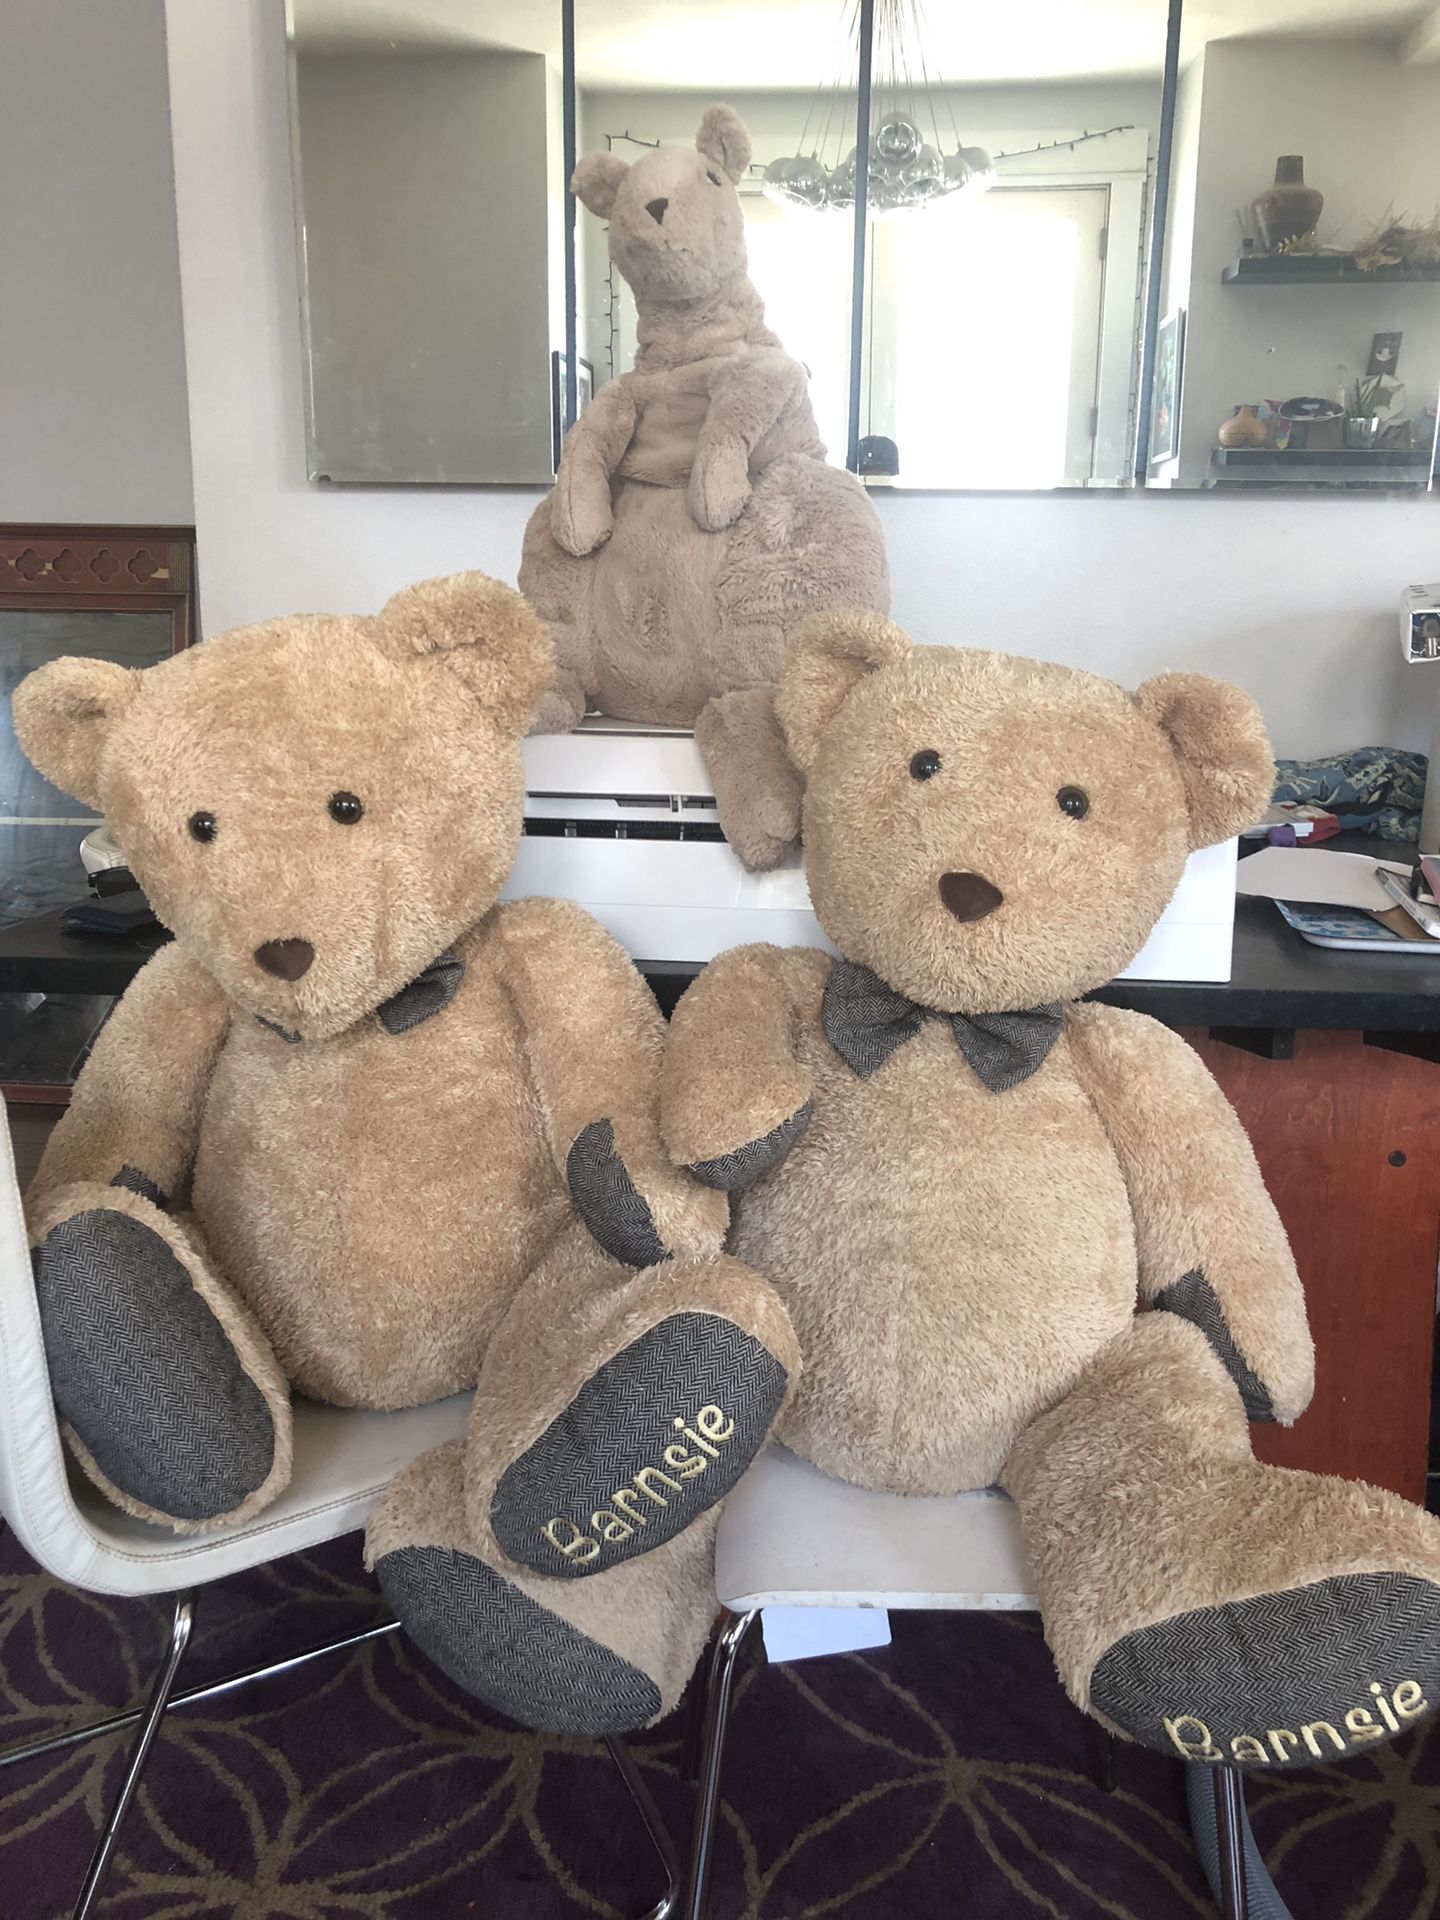 Stuffed teddy bears and Kangaroo